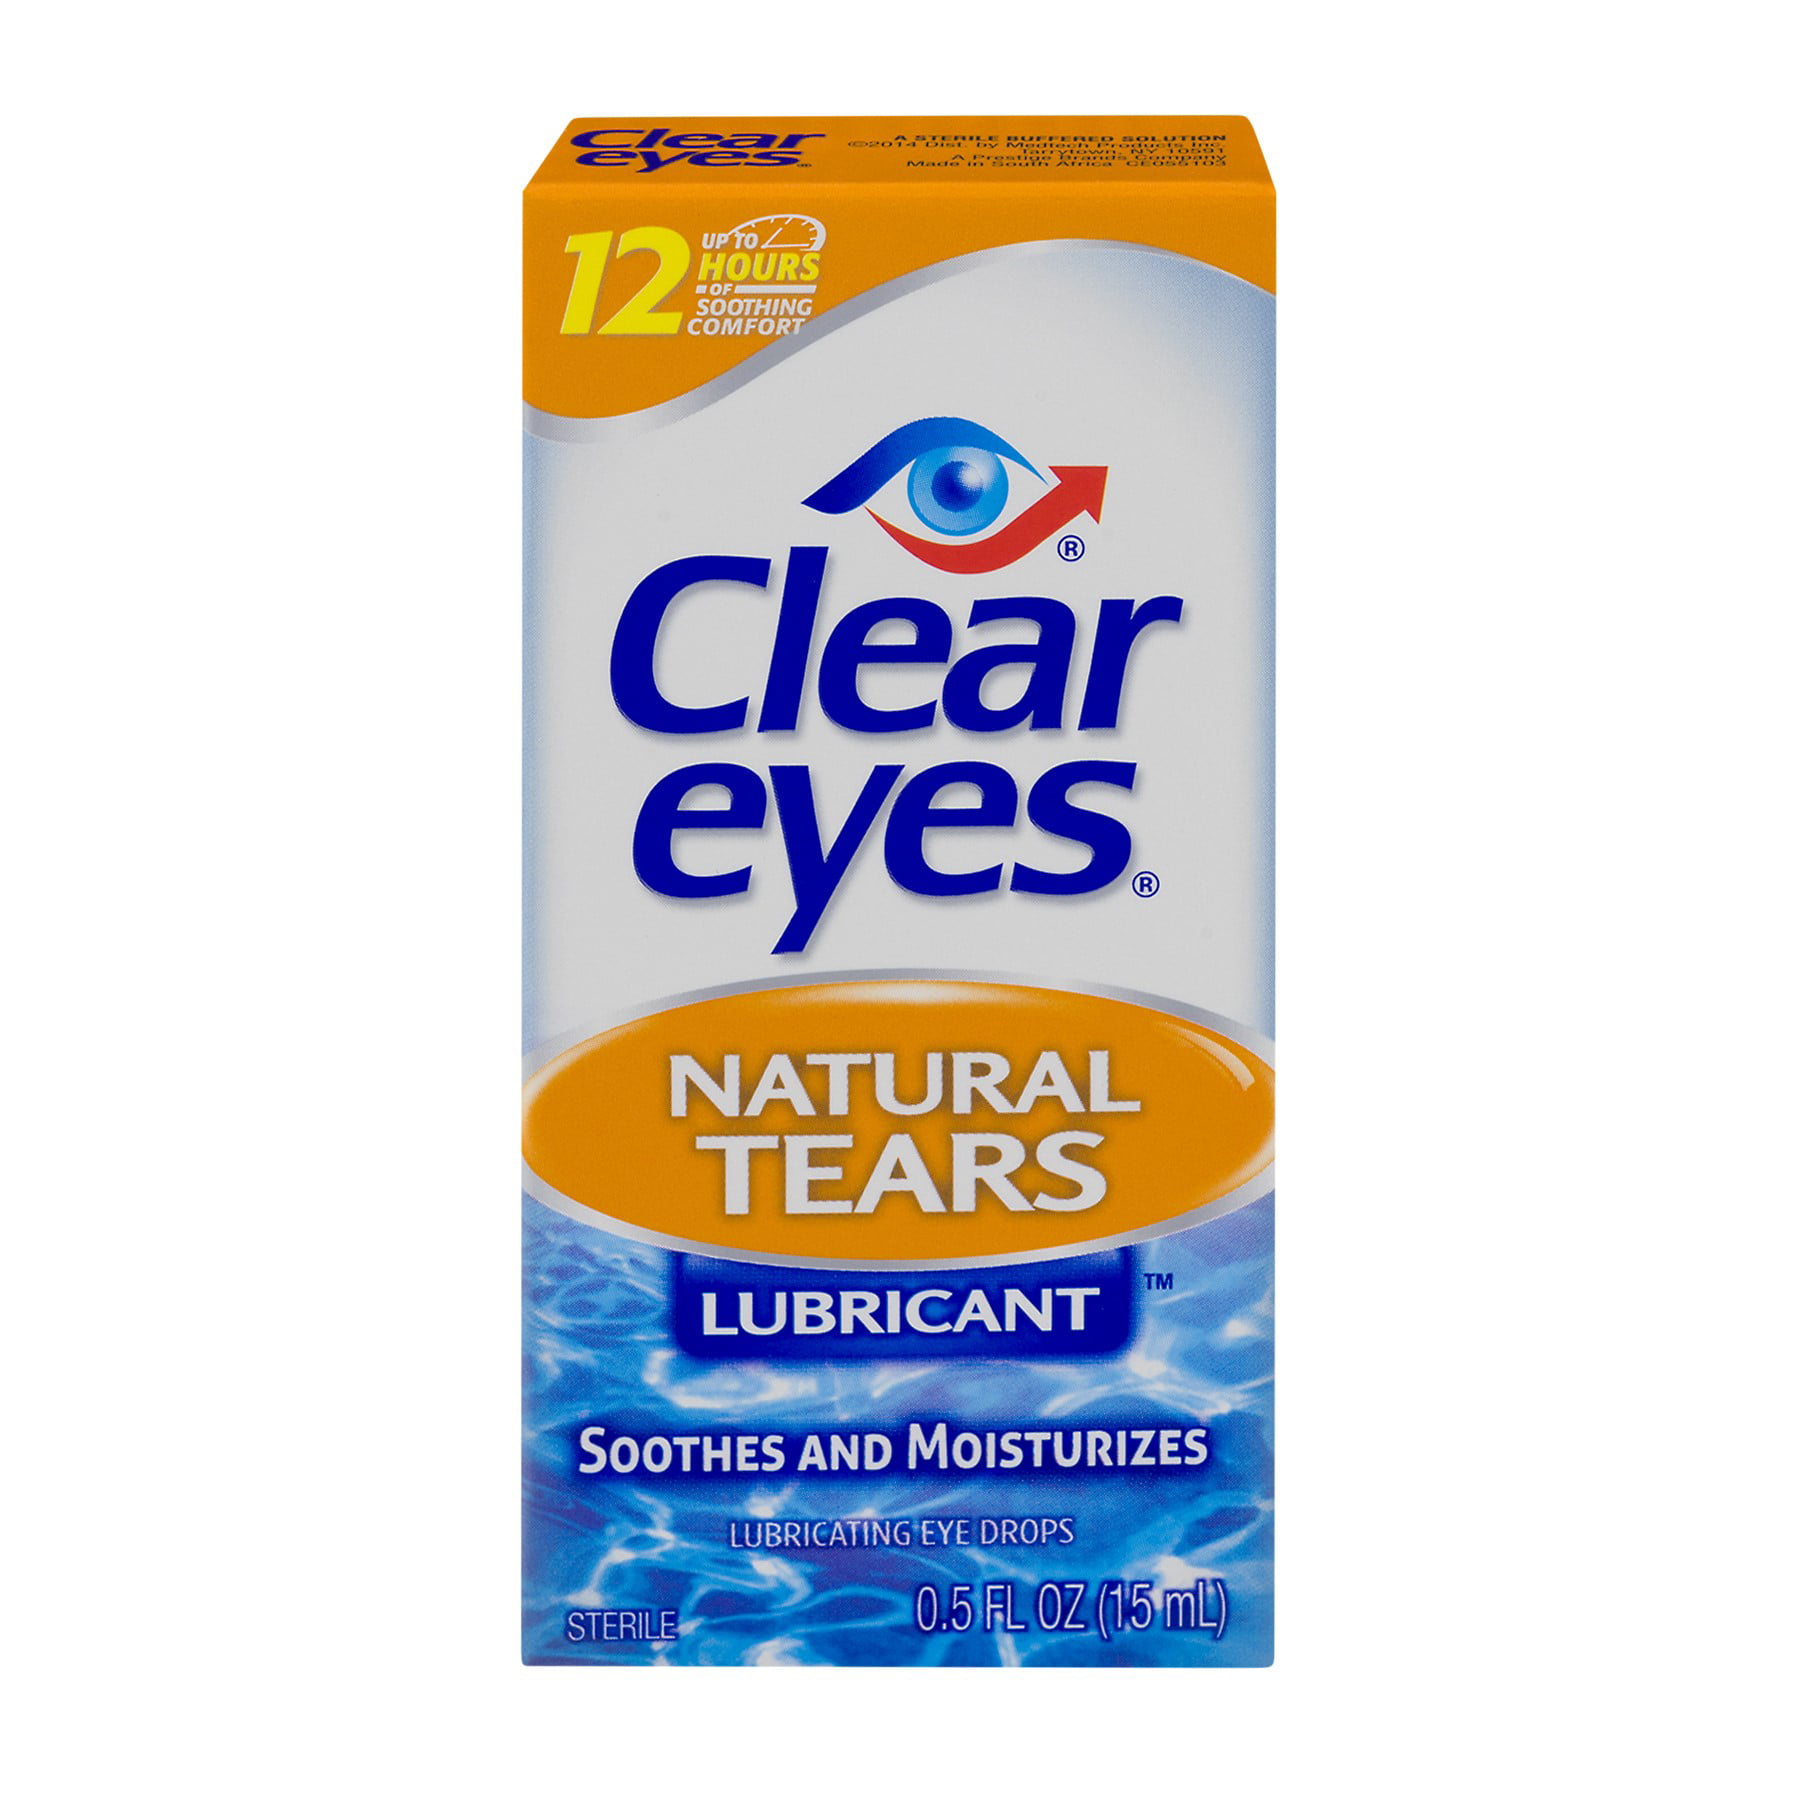 Clear eyes slowed. Natural Eye Drops лубрикант. Clear Eyes natural tears капли для глаз. Natural tear Eye Drops. Natura tears.